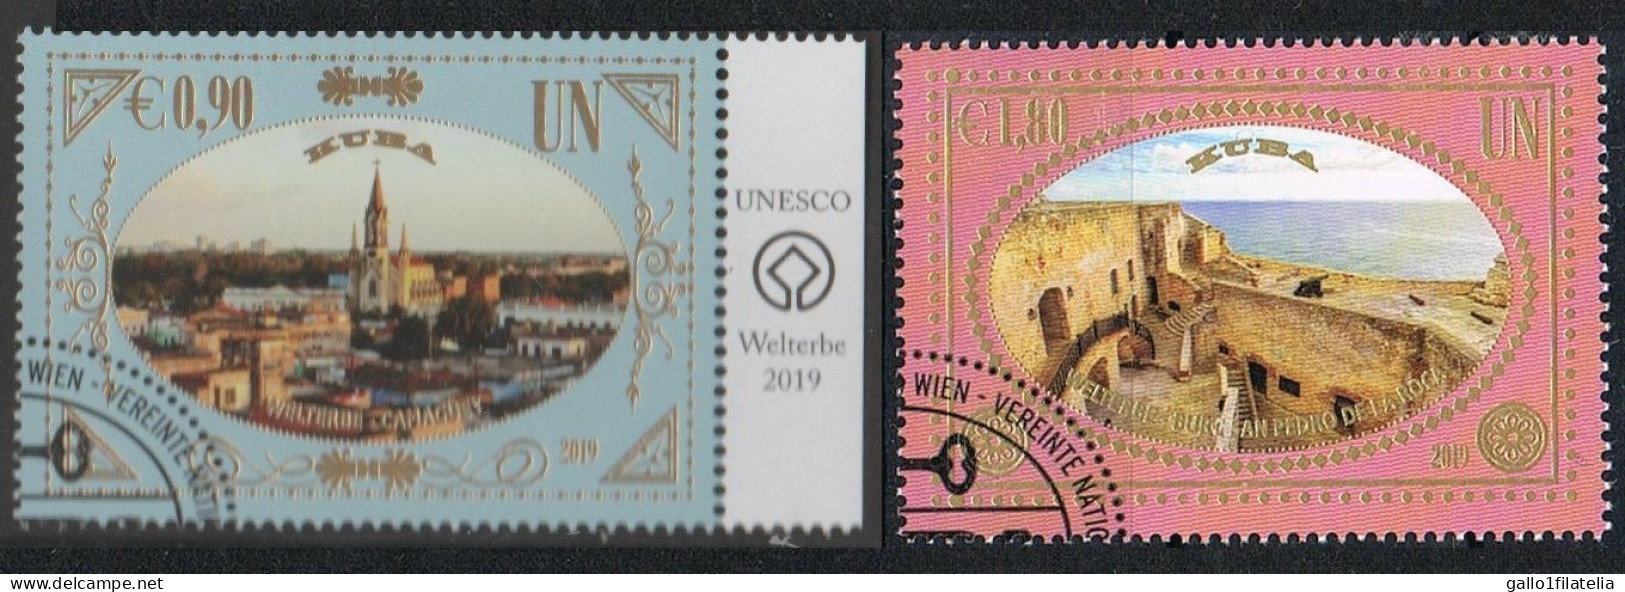 2019 - O.N.U. / UNITED NATIONS - VIENNA / WIEN - CUBA - PATRIMONIO UNESCO / UNESCO WORLD HERITAGE. USATO - Gebraucht